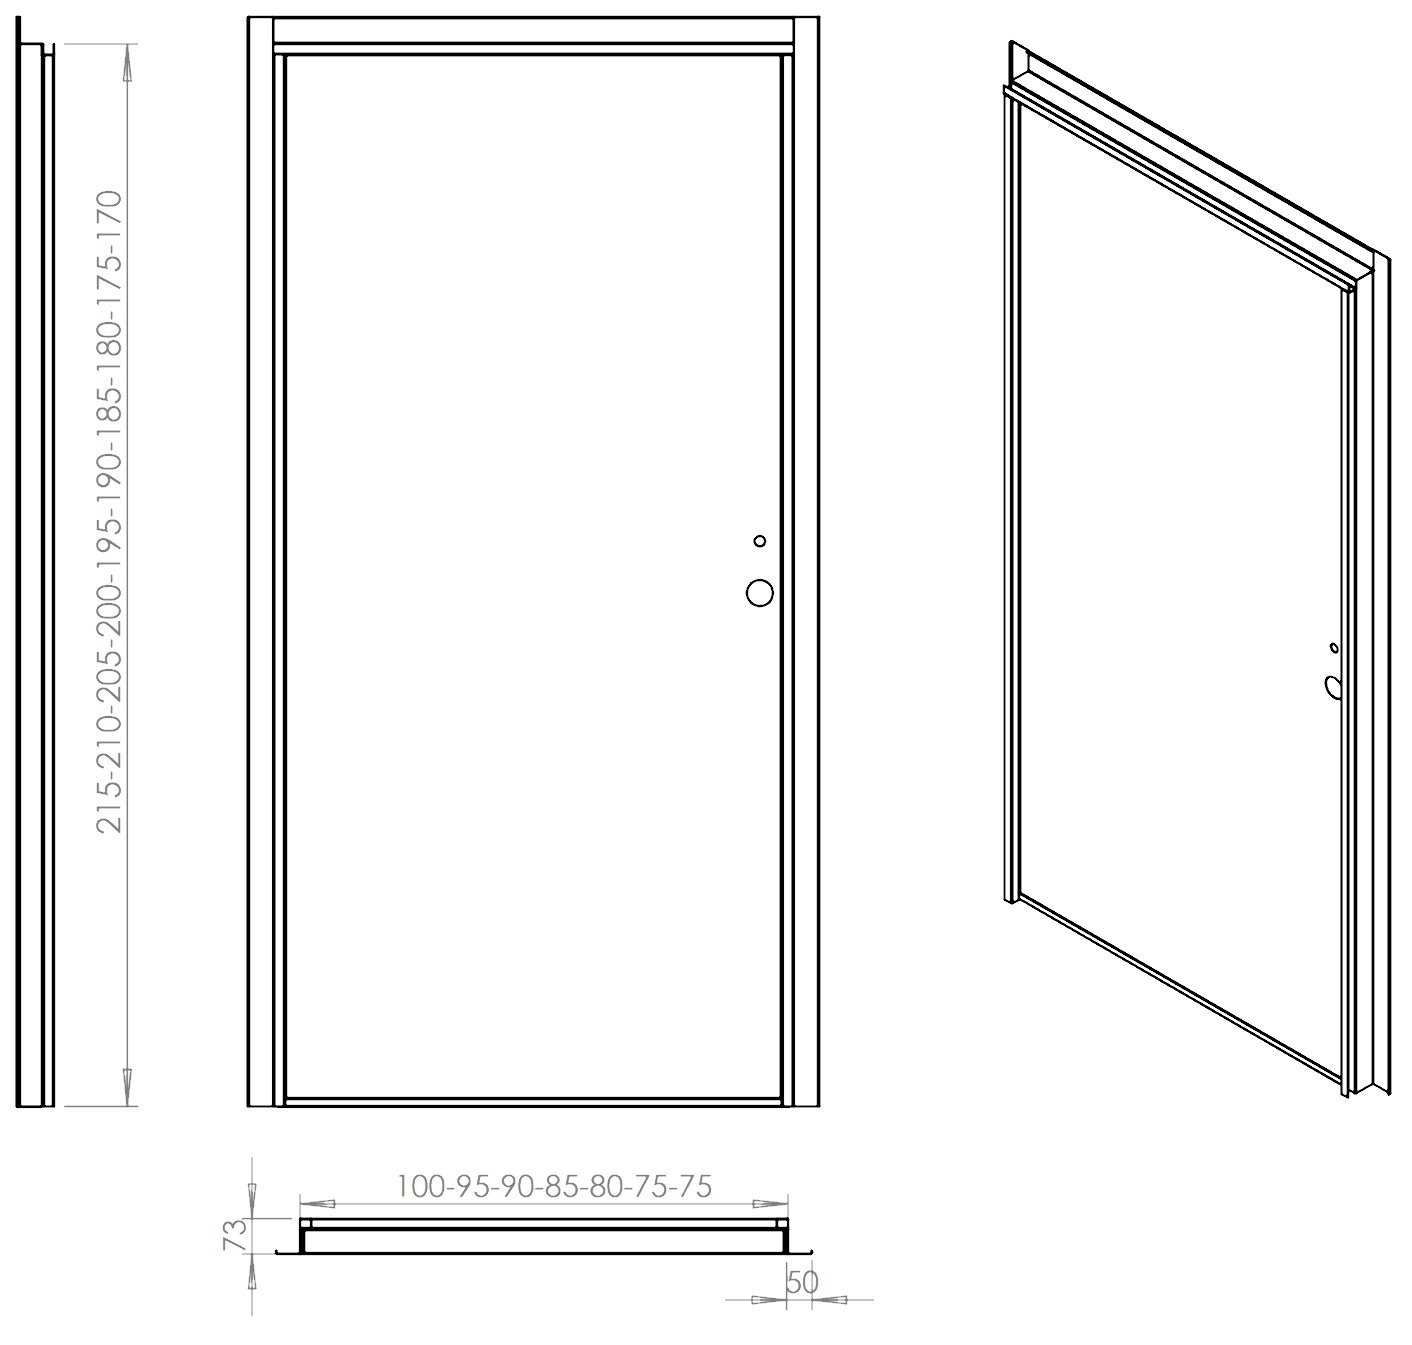 Frame Dimensions, Design Of Storage Room Door / Warehouse Door By Metal System Bros In Thessaloniki, Greece